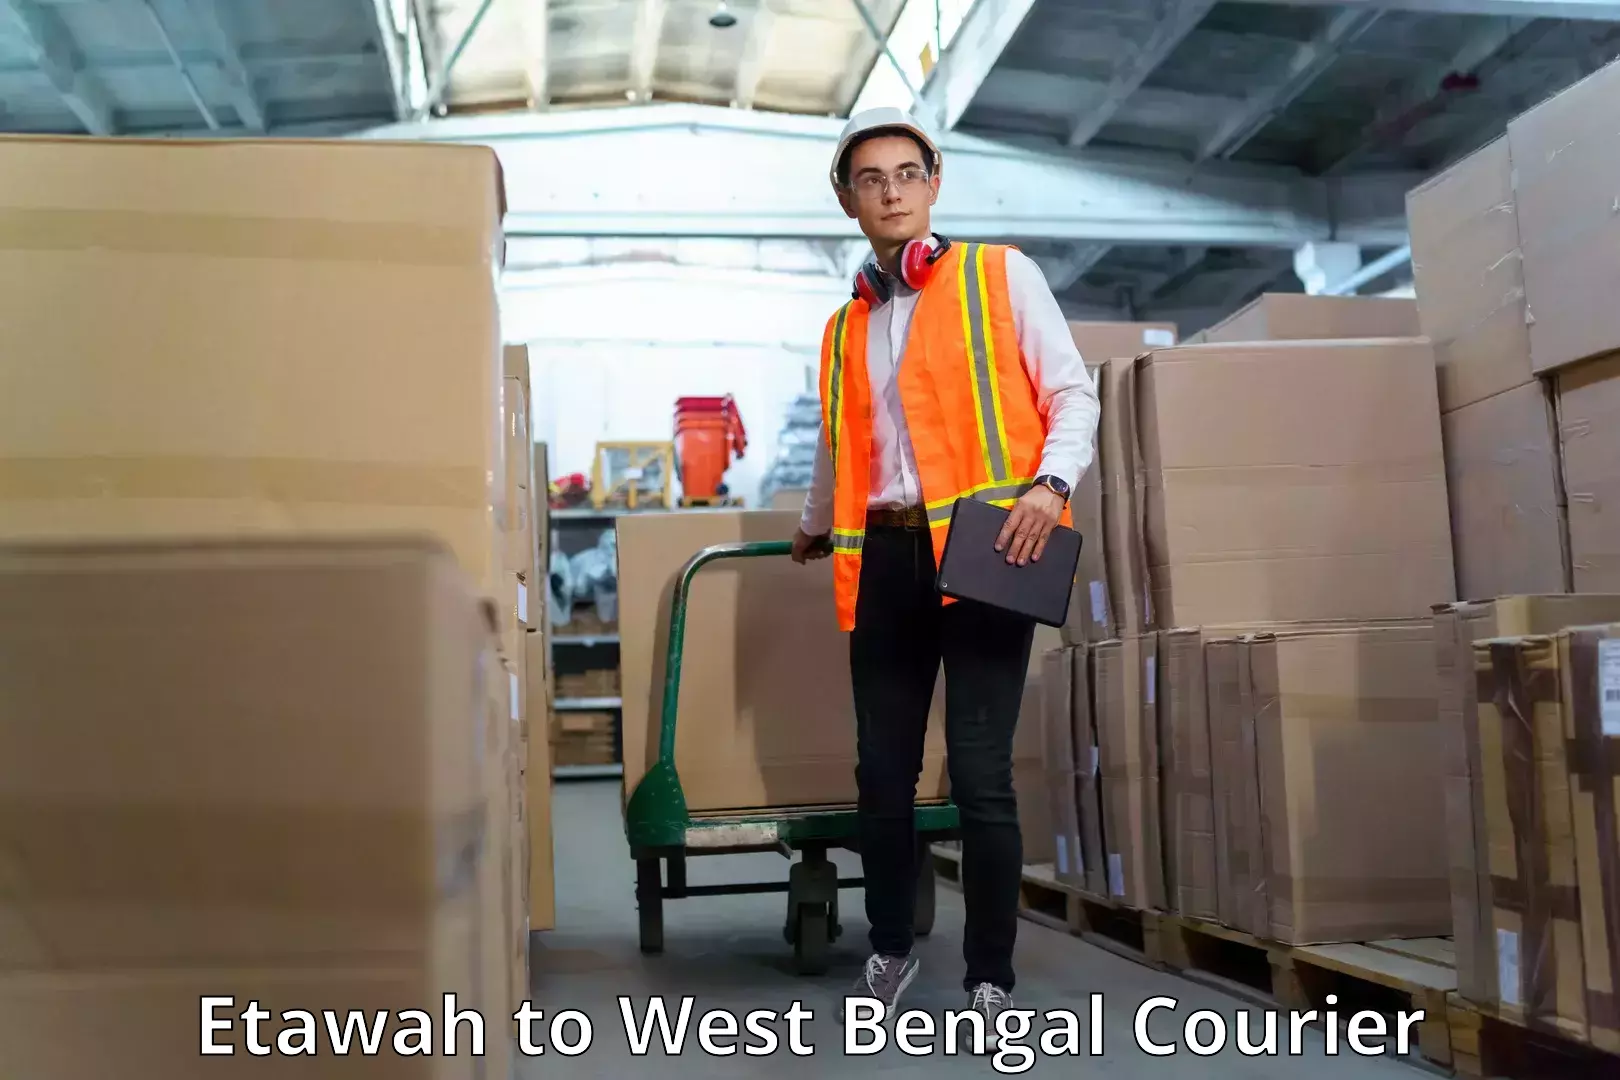 Global shipping networks Etawah to West Bengal